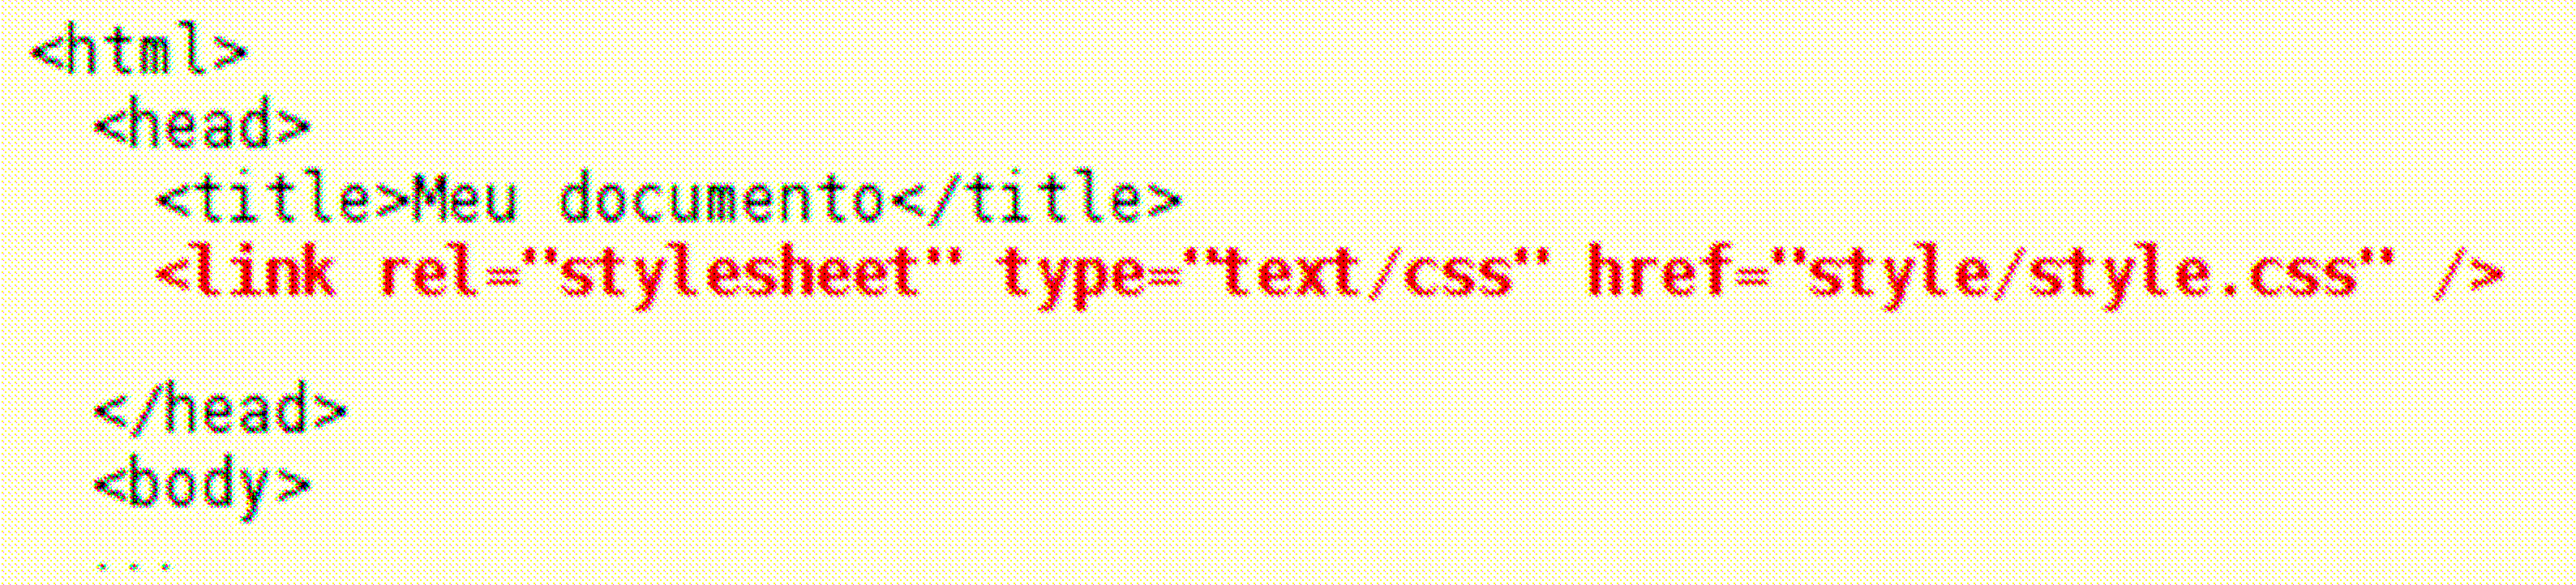 7.3.2 - Método interno (tag style) (css2.html): 7.3.3 - Método externo (link para uma folha de estilos): Método recomendado! Será utilizado nesta disciplina.